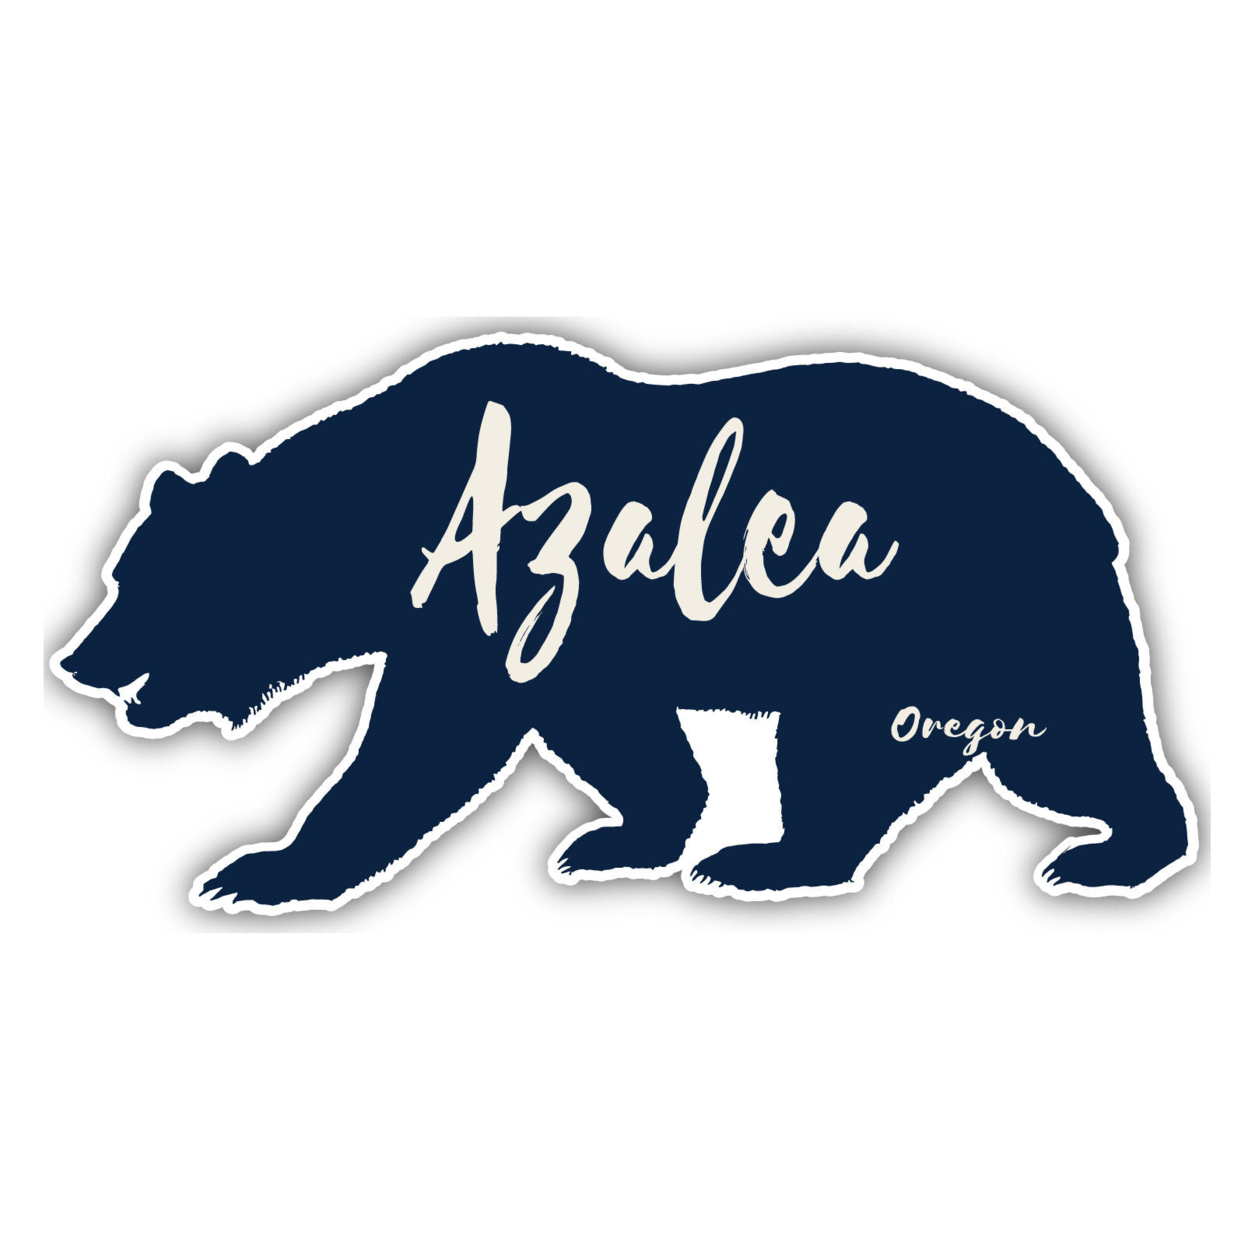 Azalea Oregon Souvenir Decorative Stickers (Choose Theme And Size) - 4-Pack, 6-Inch, Bear